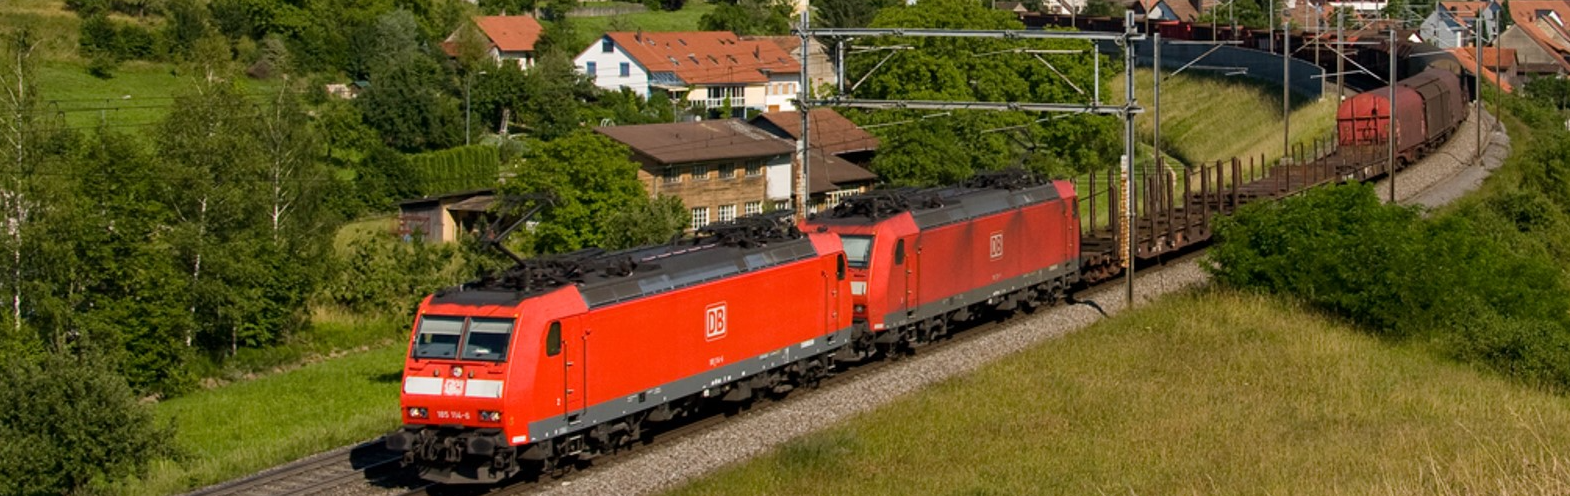 Red locomotives